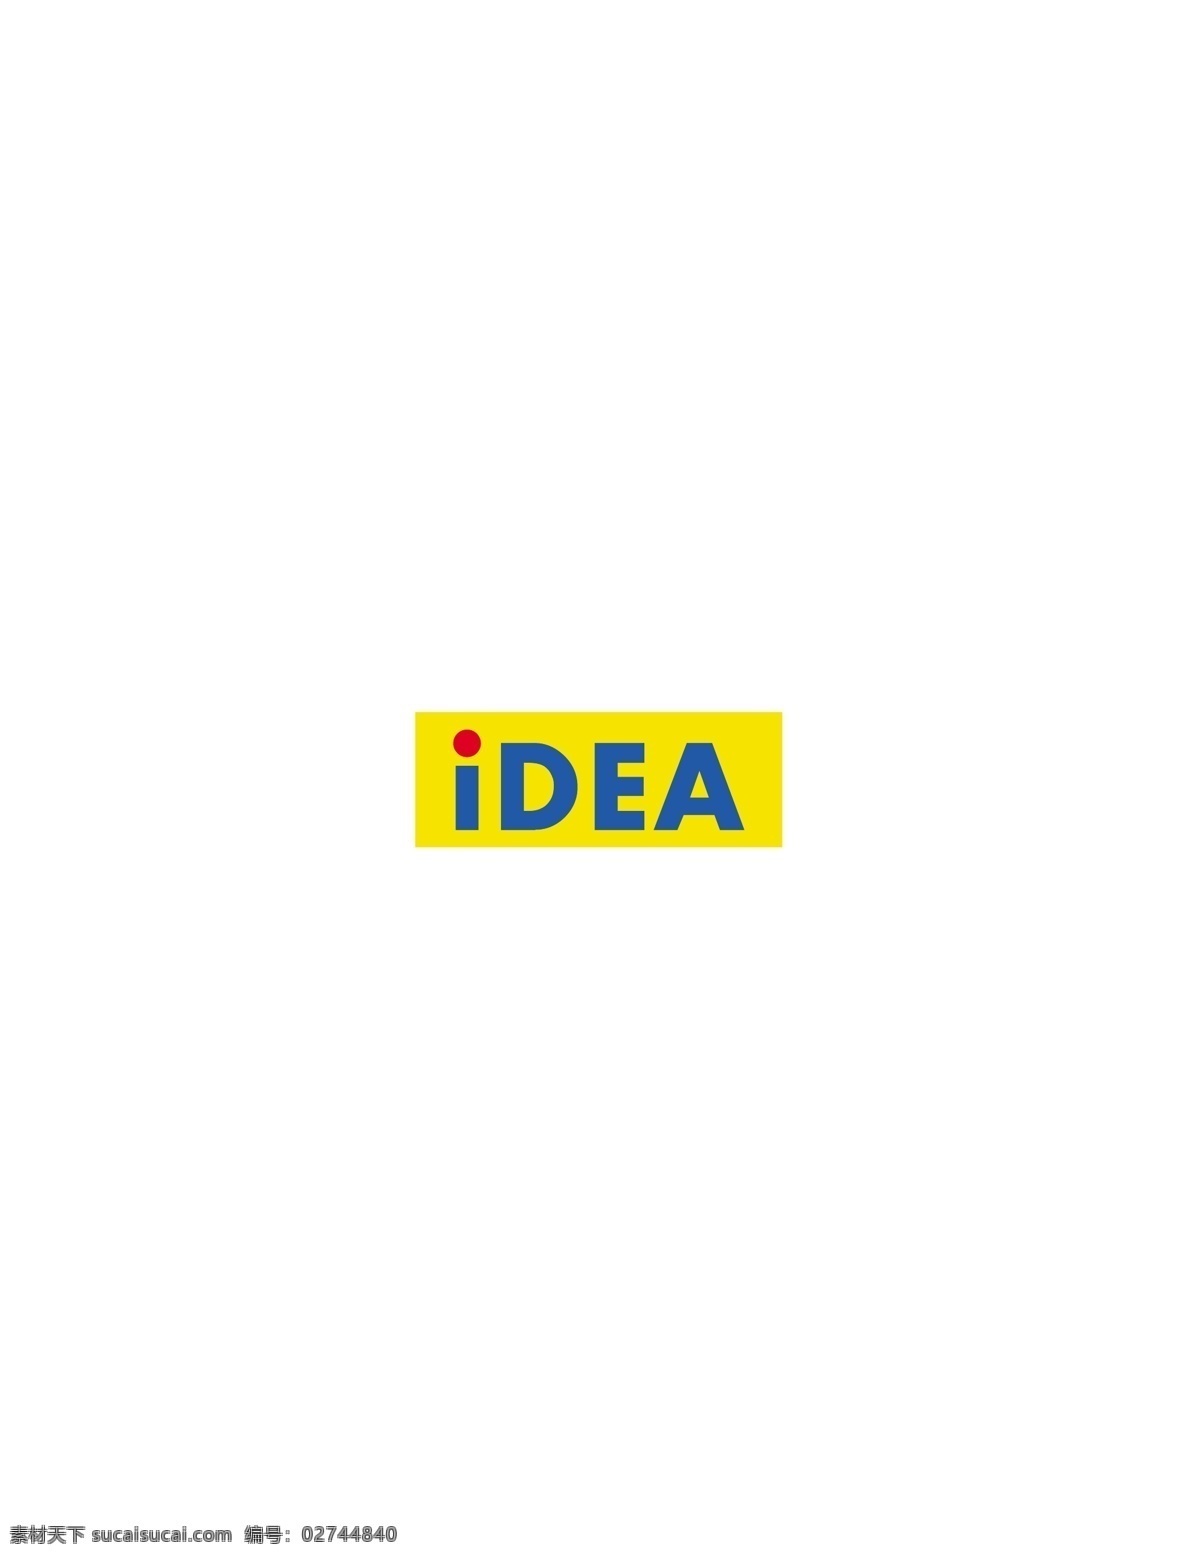 idea logo 设计欣赏 标志设计 欣赏 矢量下载 网页矢量 商业矢量 logo大全 红色